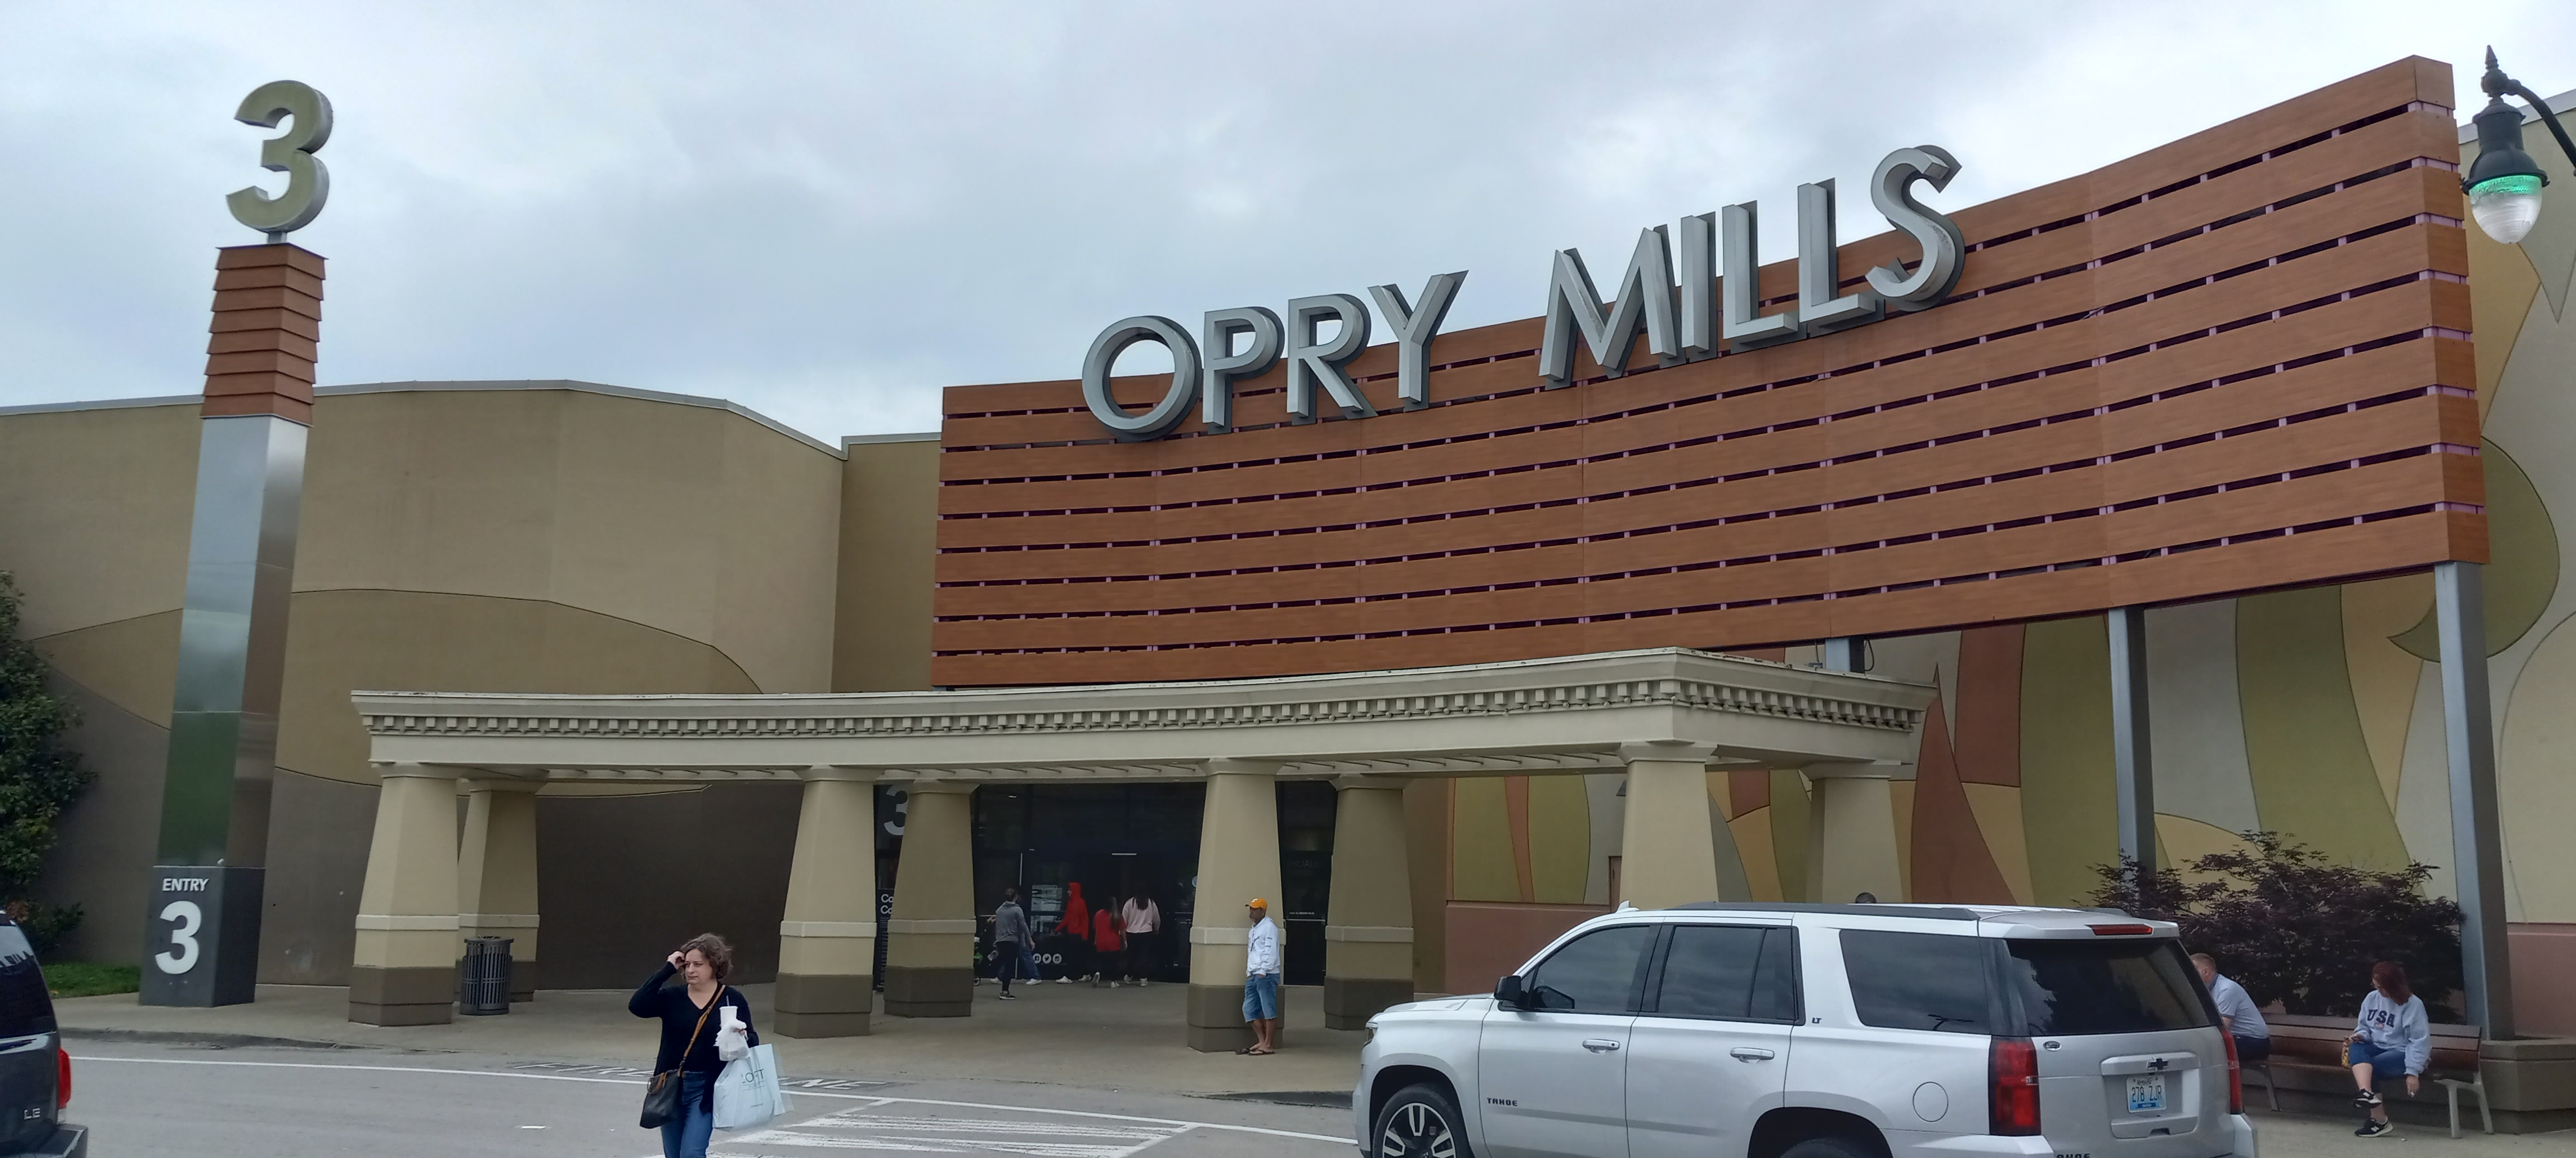 Opry Mills | Malls and Retail Wiki | Fandom